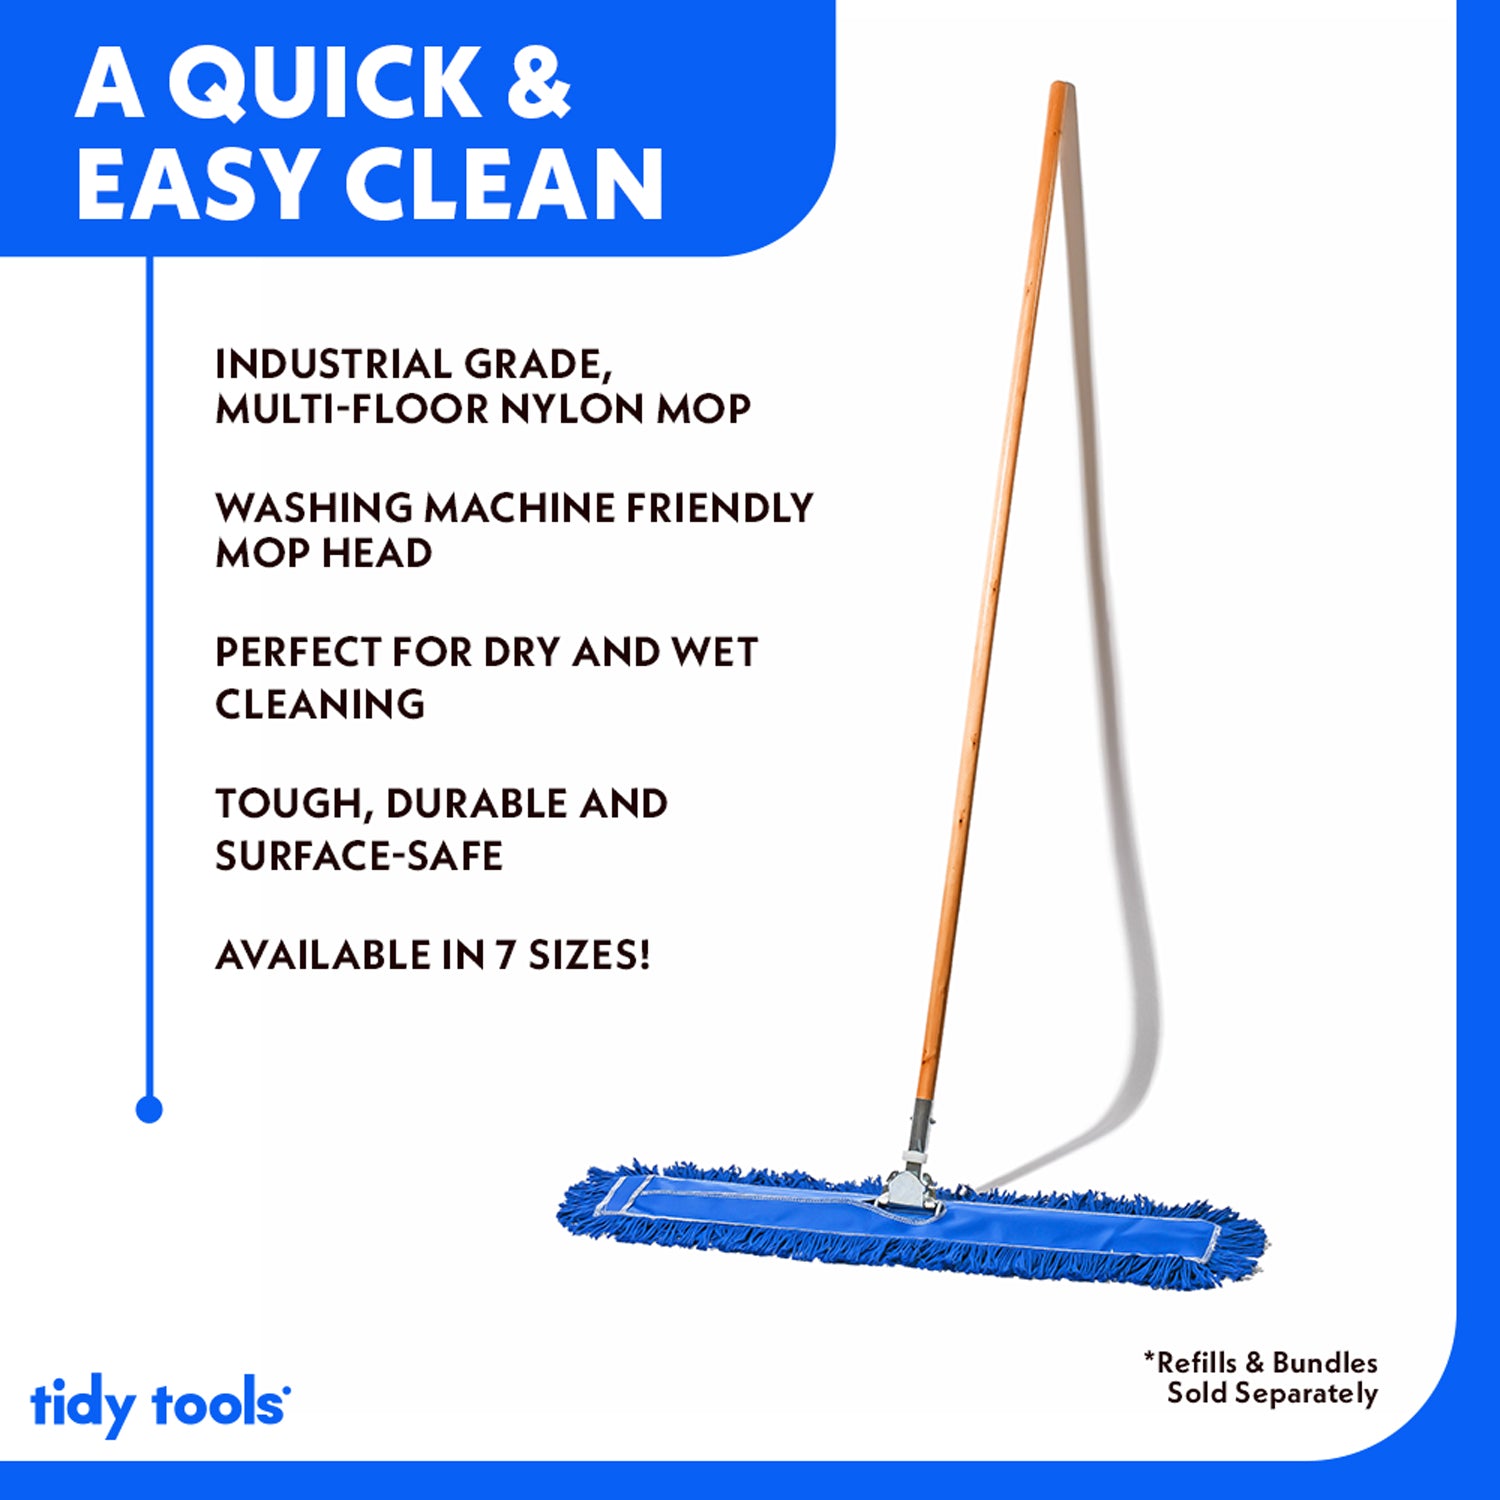 Tidy Tools 60 Inch Nylon Dust Mop Wood Handle